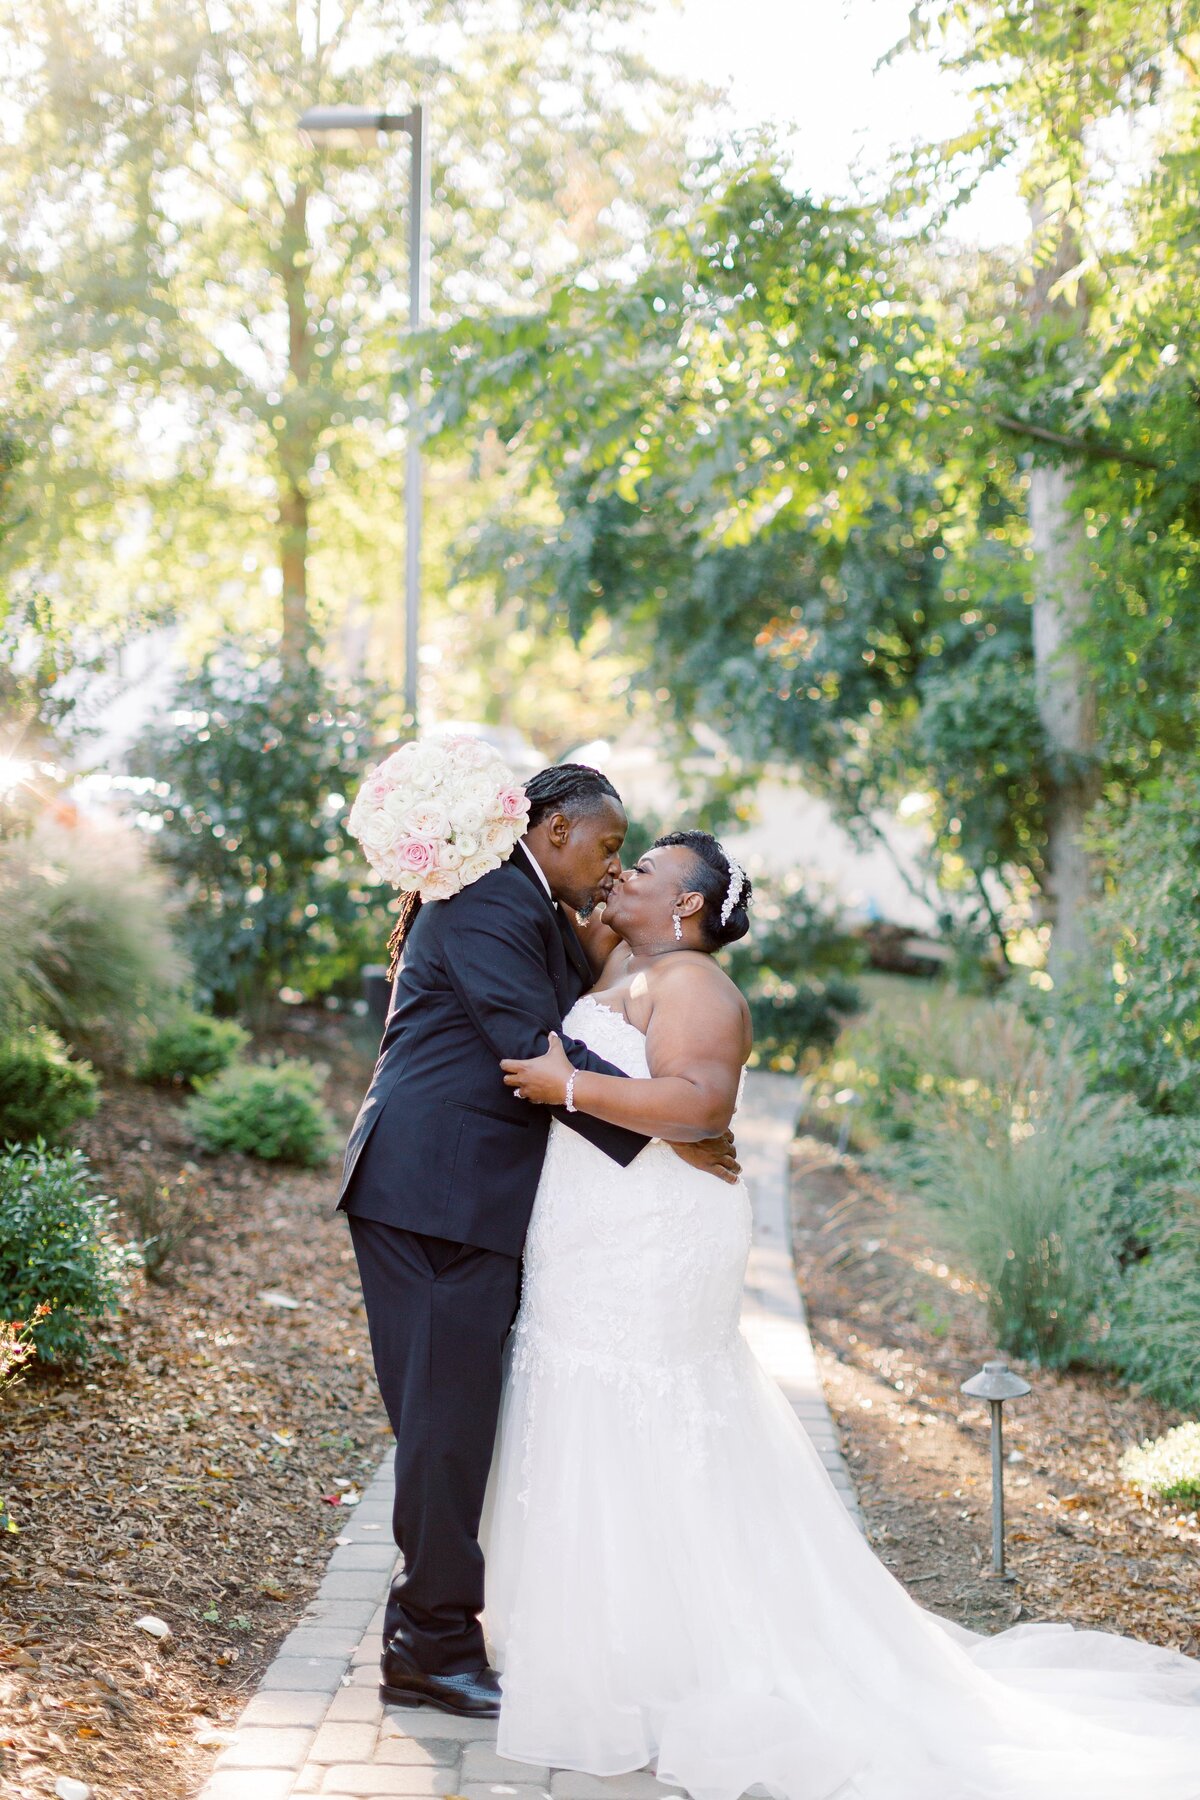 Ritchie Hill North Carolina Wedding Photographer Casie Marie Photography-8